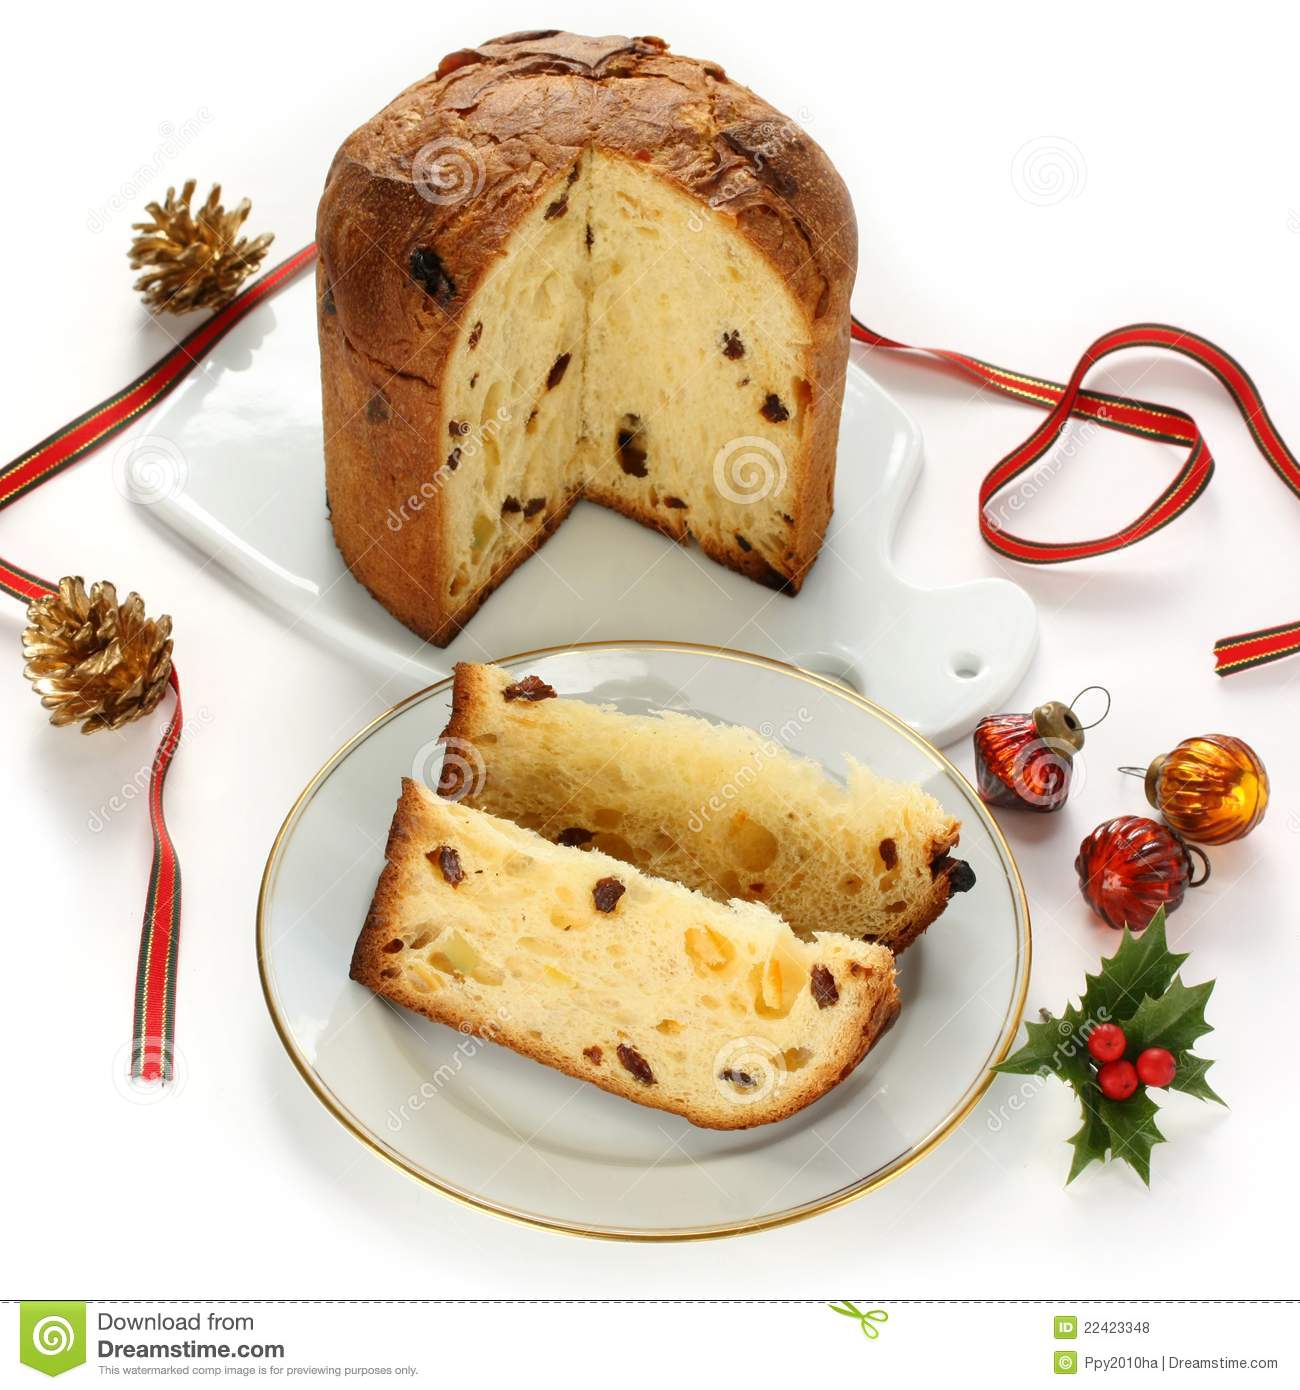 Panettone Italian Christmas Bread Royalty Free Stock Photos   Image    